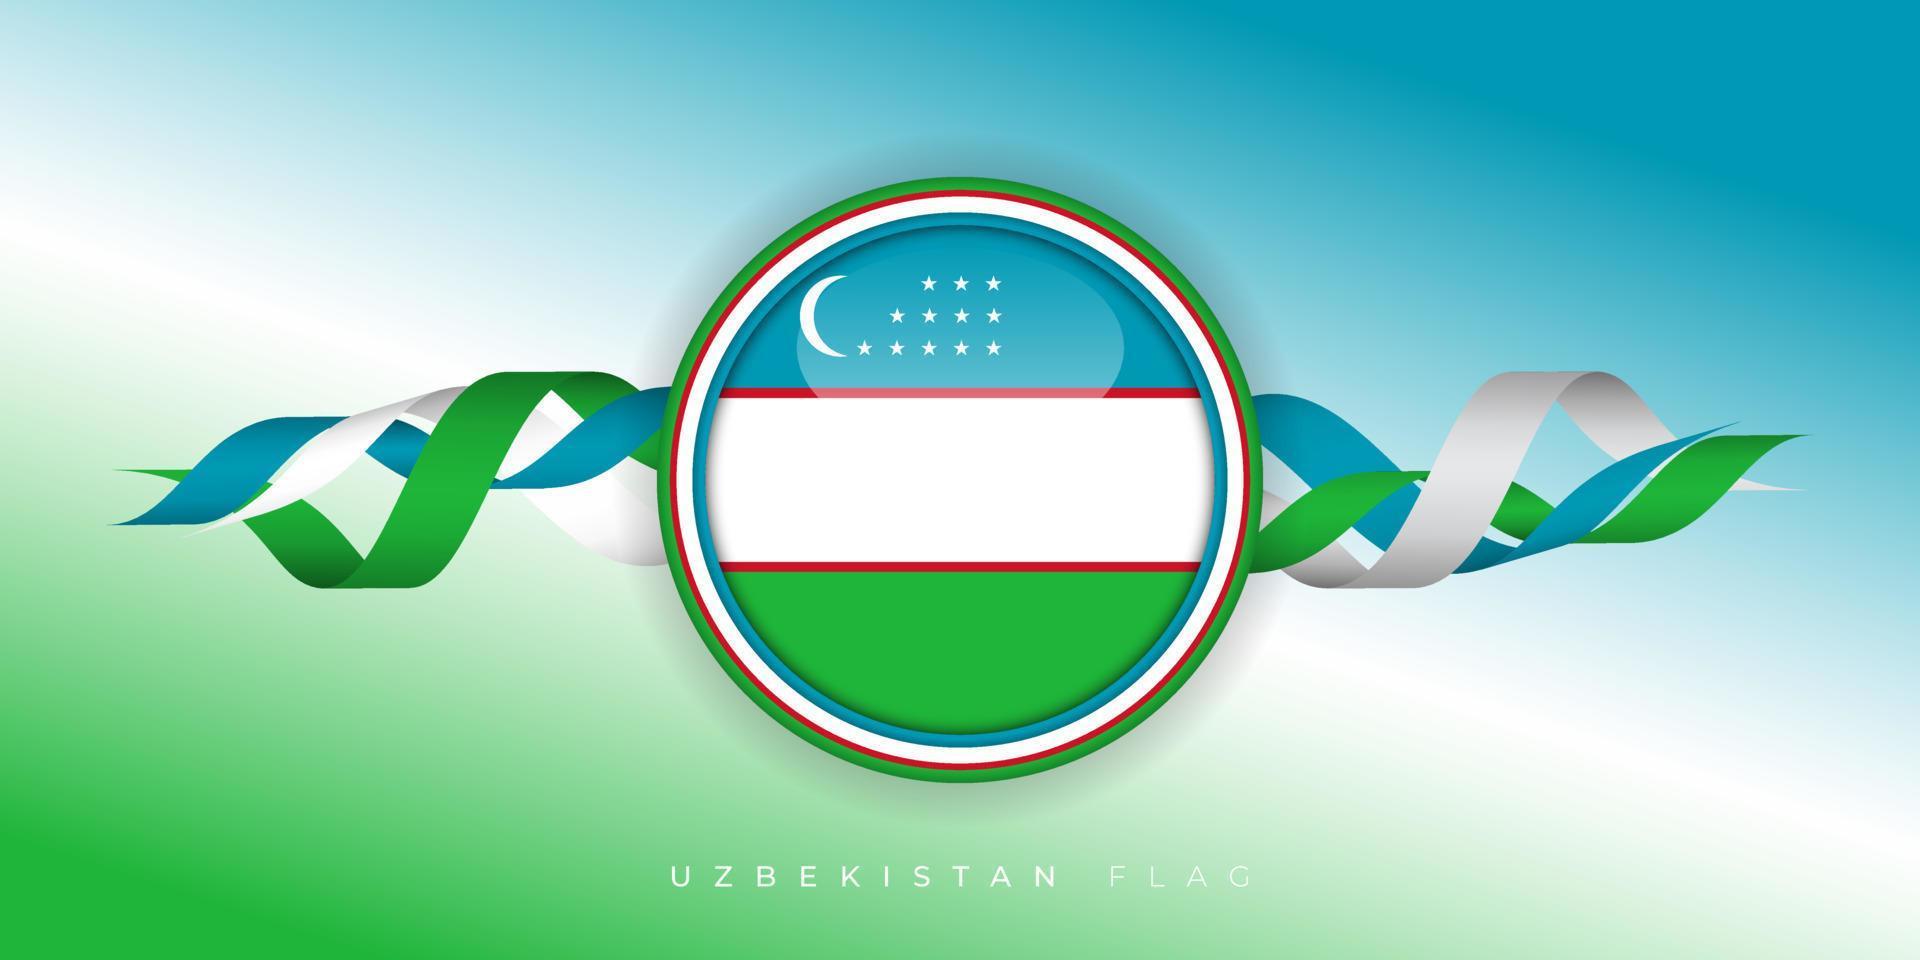 Uzbekistan independence day background with Circle Uzbekistan flag and ribbon design vector